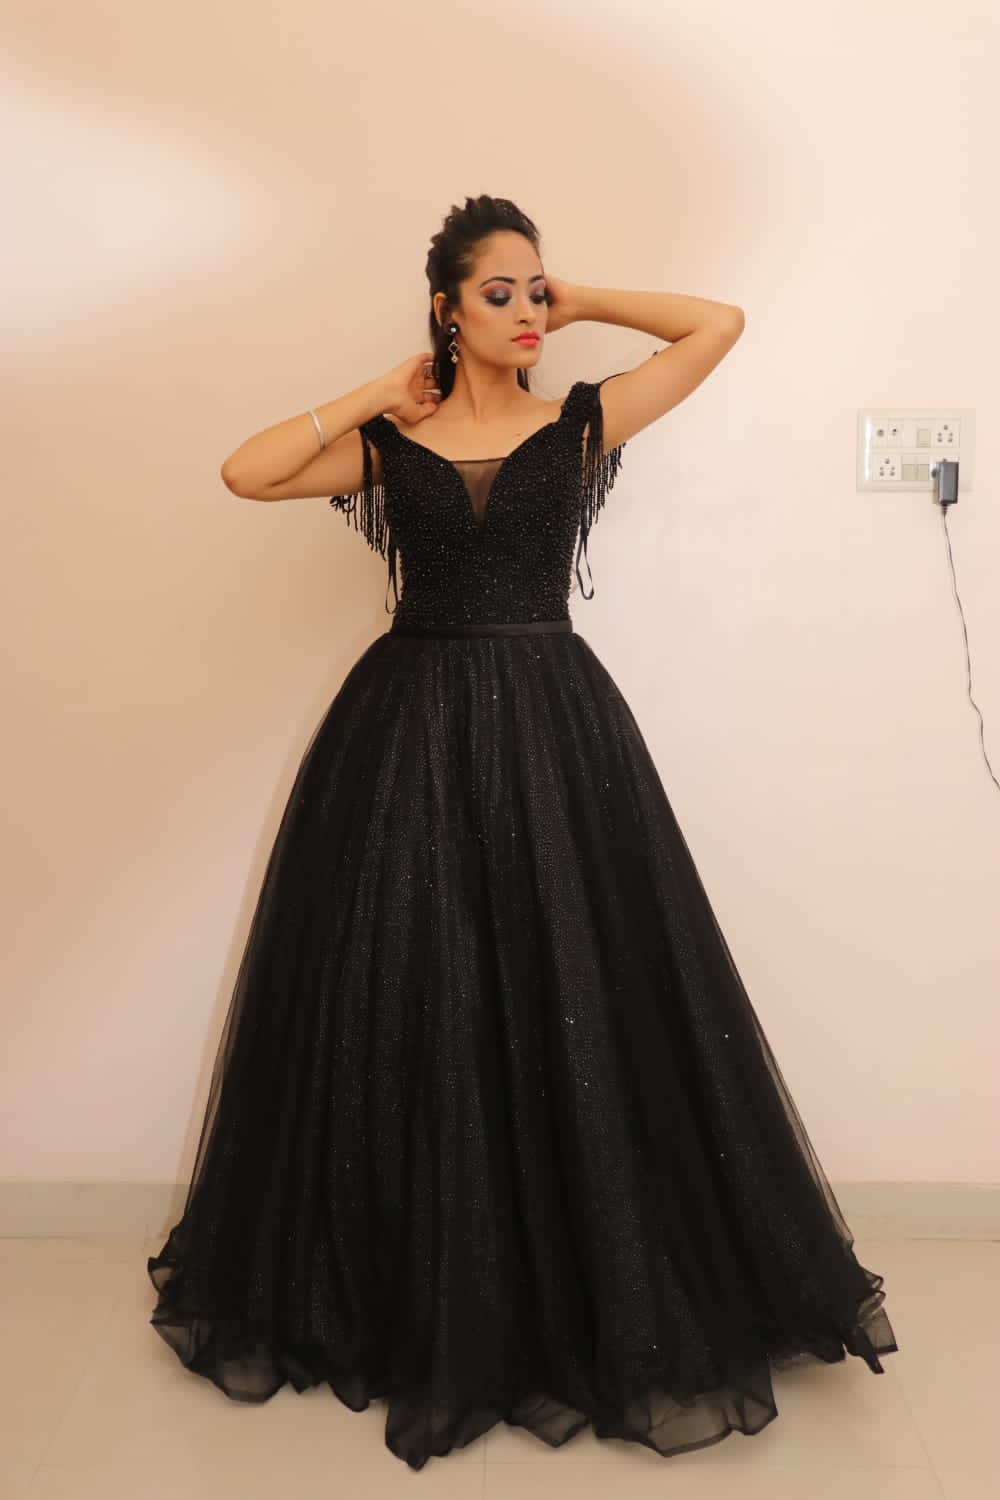 Black ball gown - Fancyano Black Pre-wedding Gown